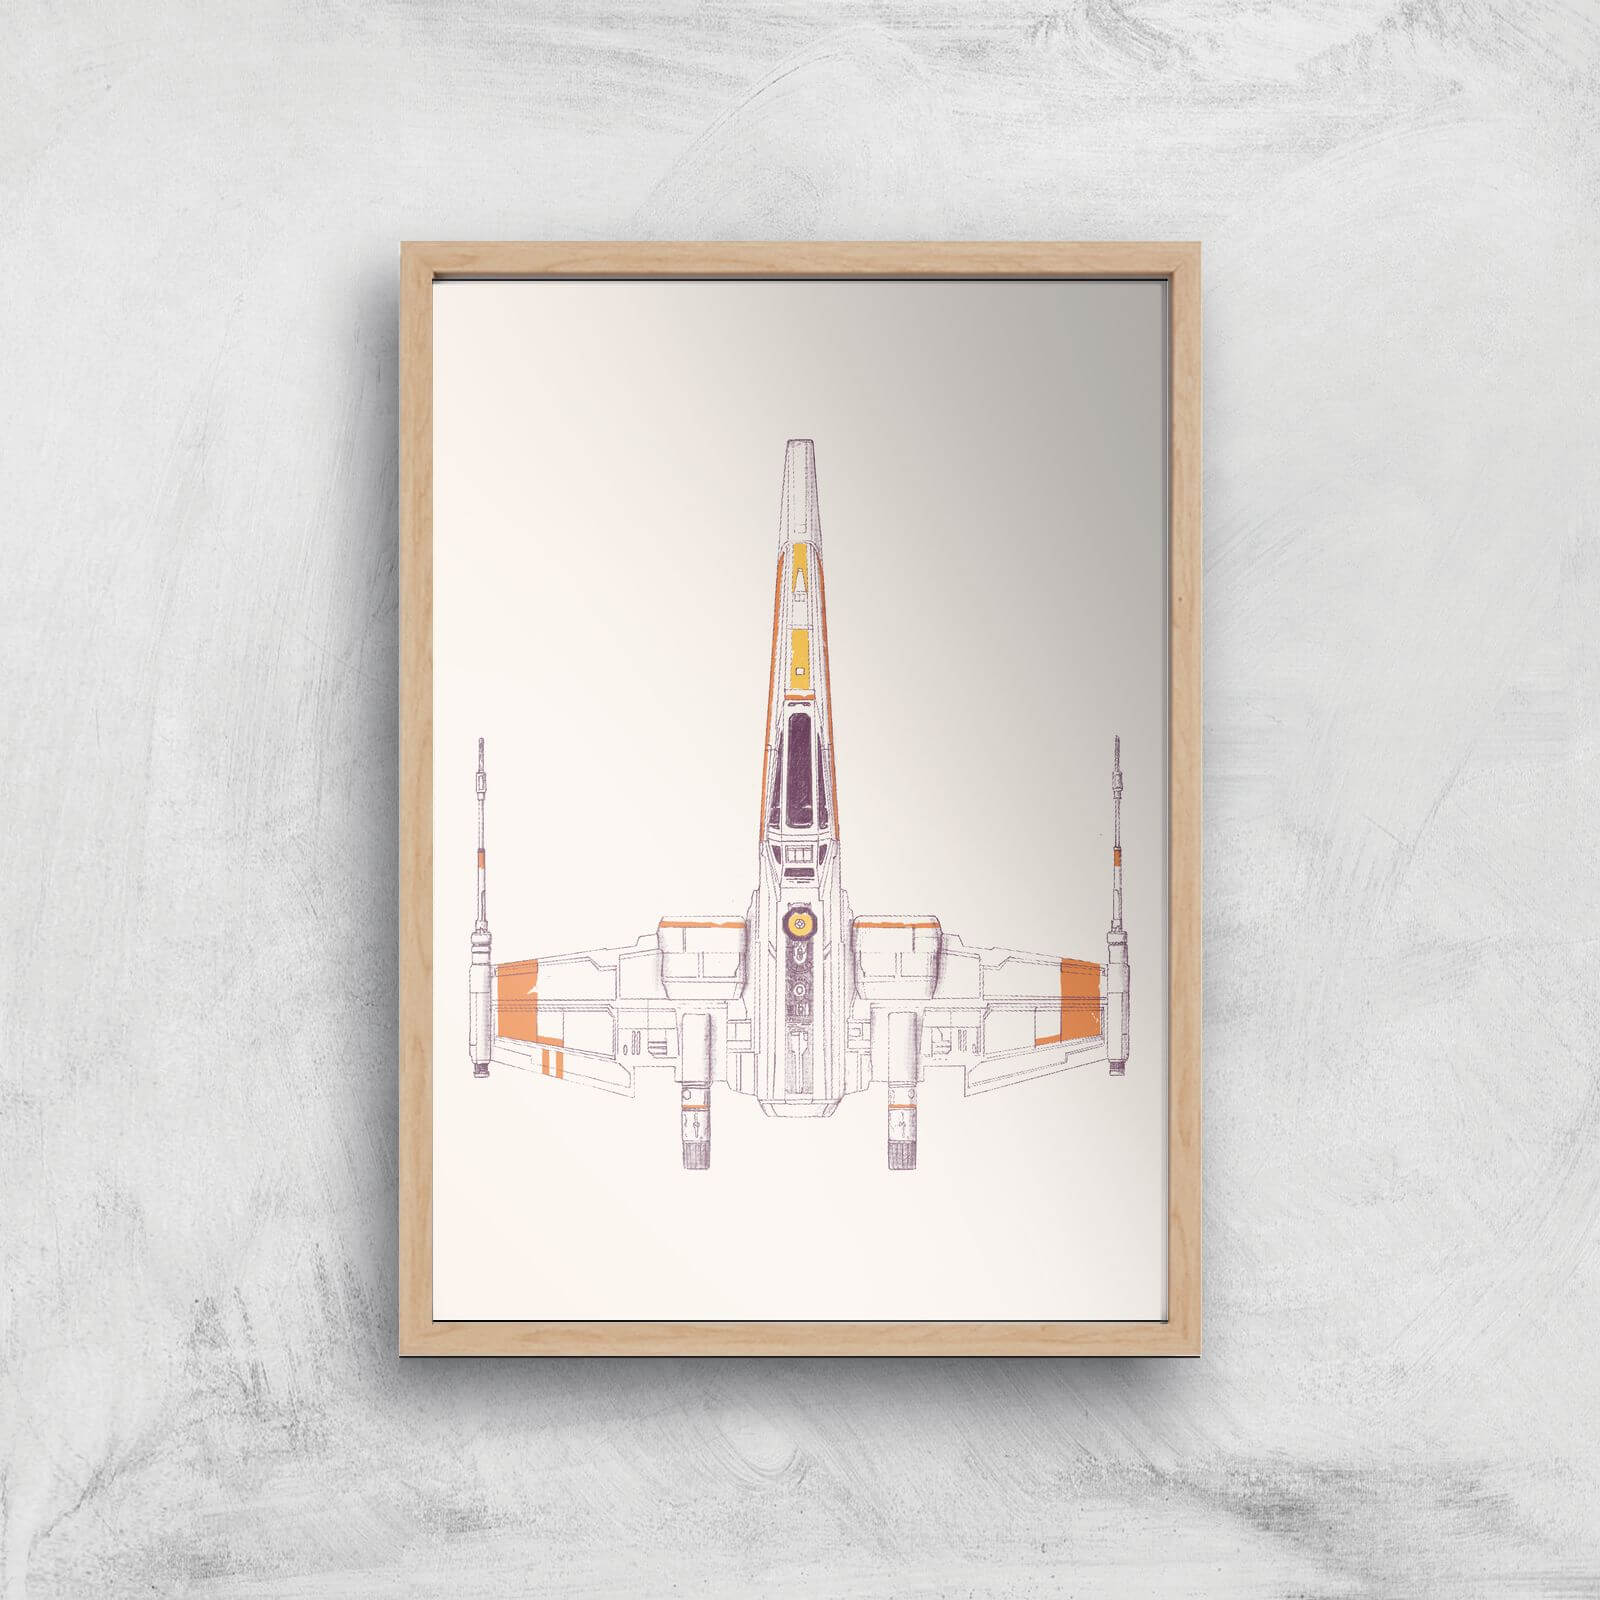 Space Ship Giclee Art Print - A2 - Wooden Frame